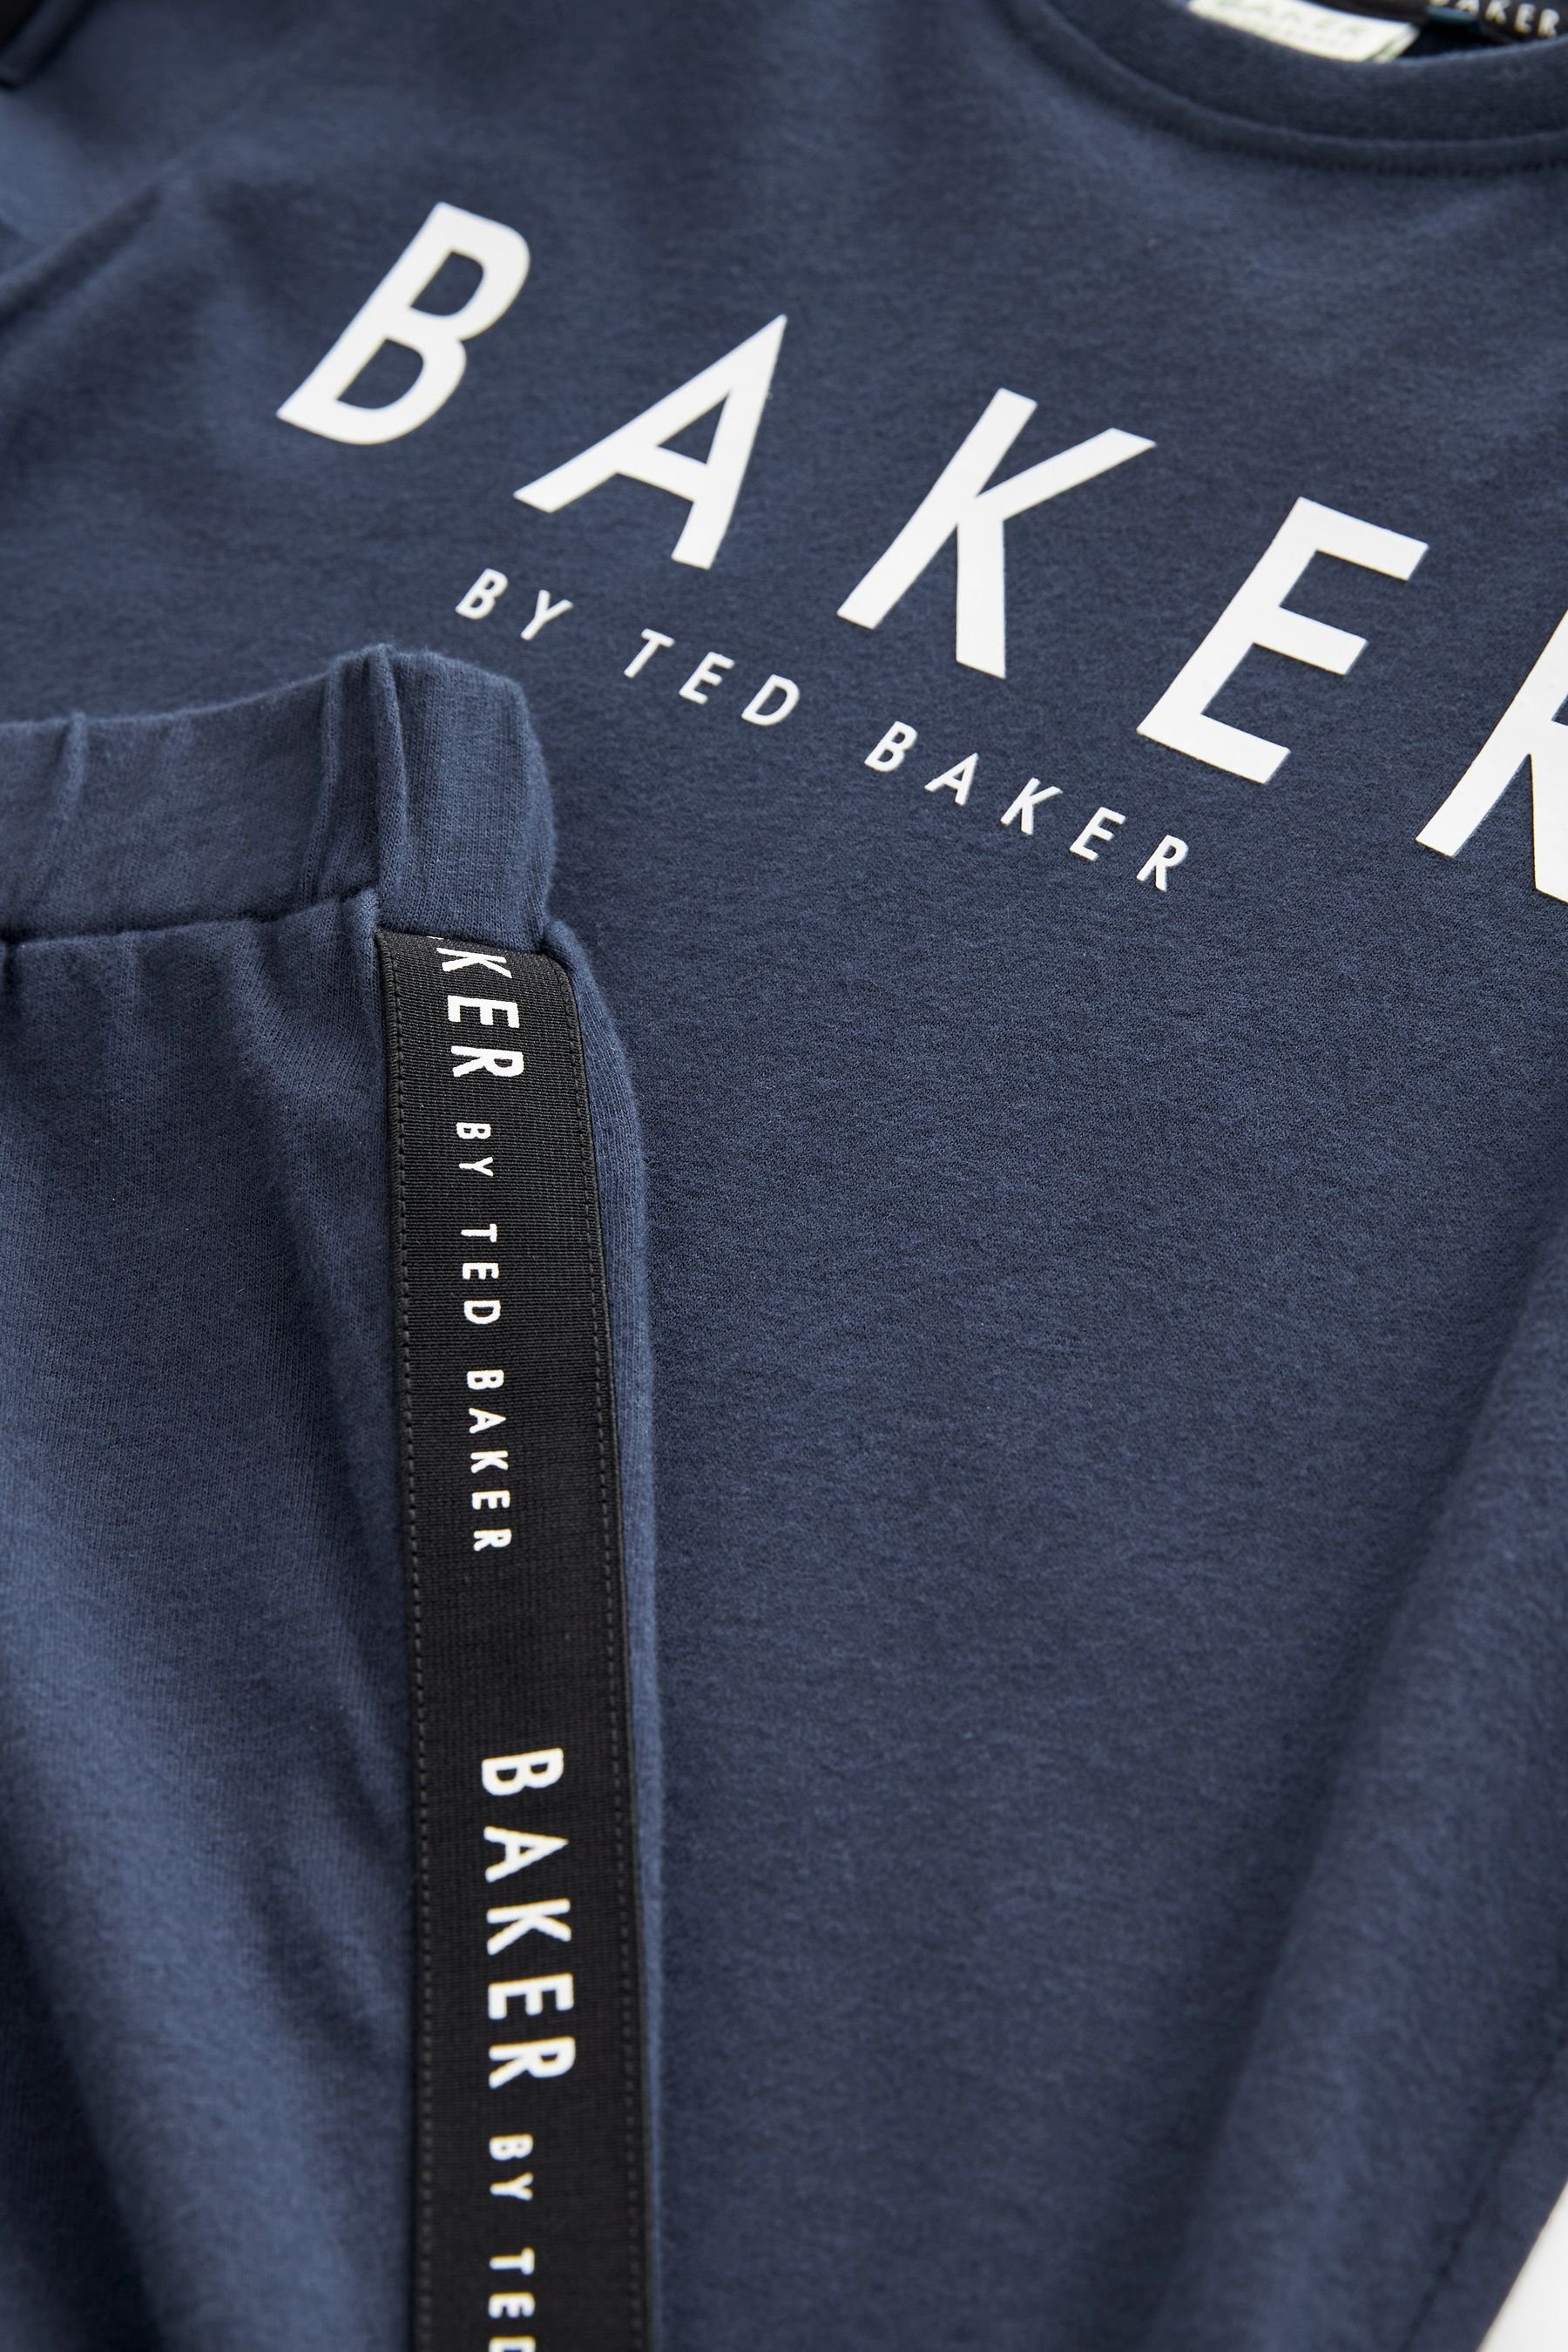 Baker Baker tlg) Ted Baker (2 Ted by Pyjama Pyjama Baker by